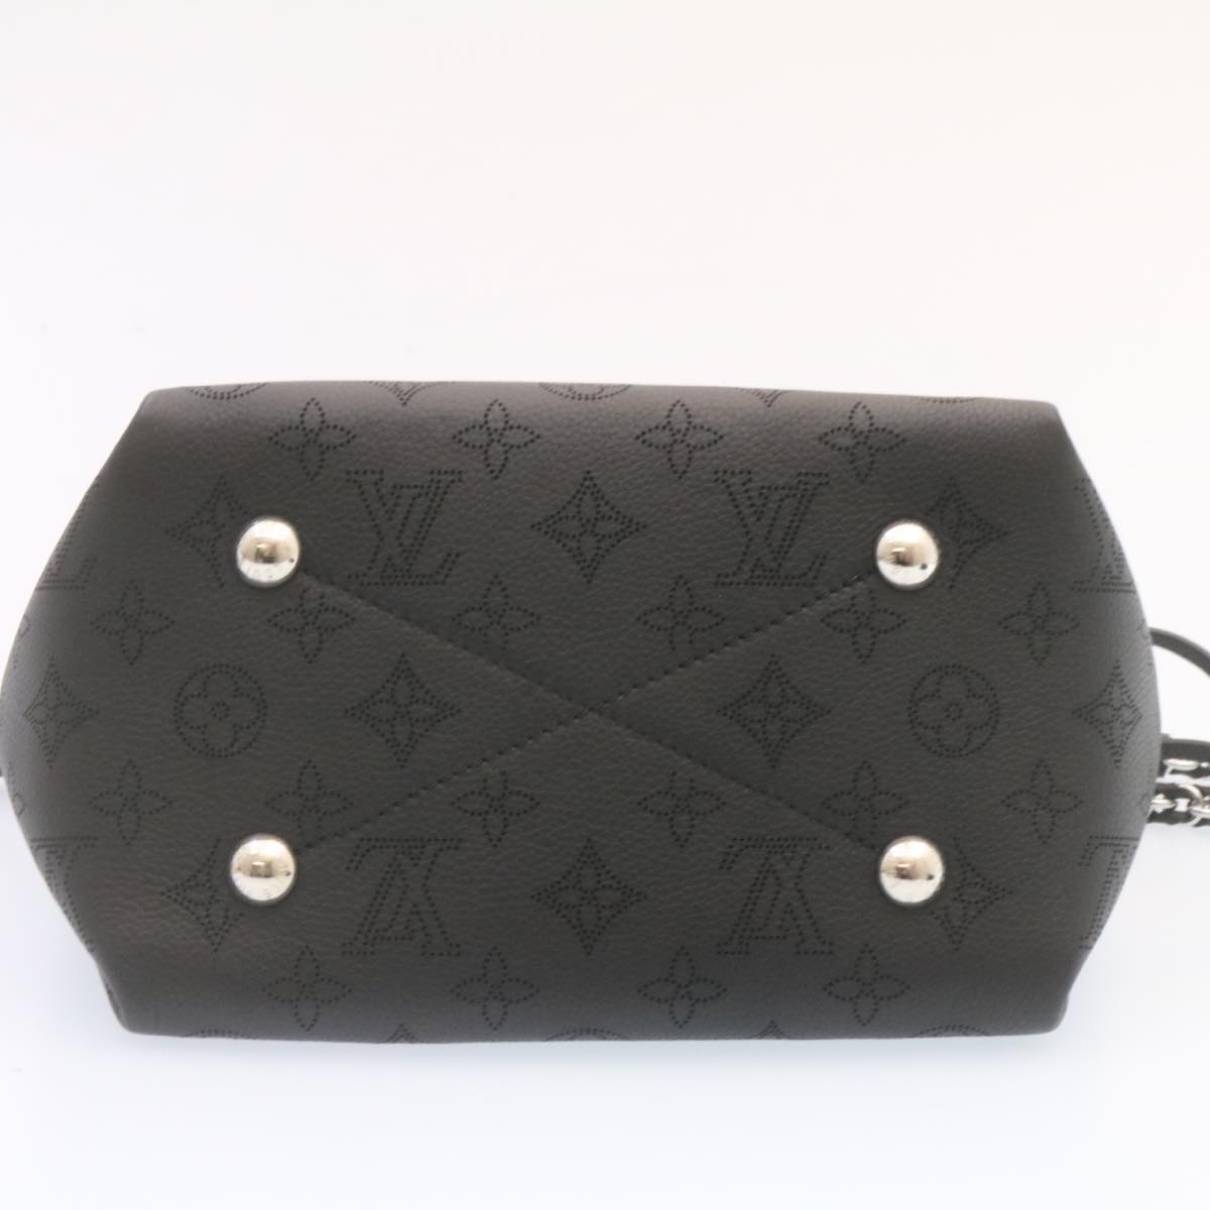 Leather handbag Louis Vuitton